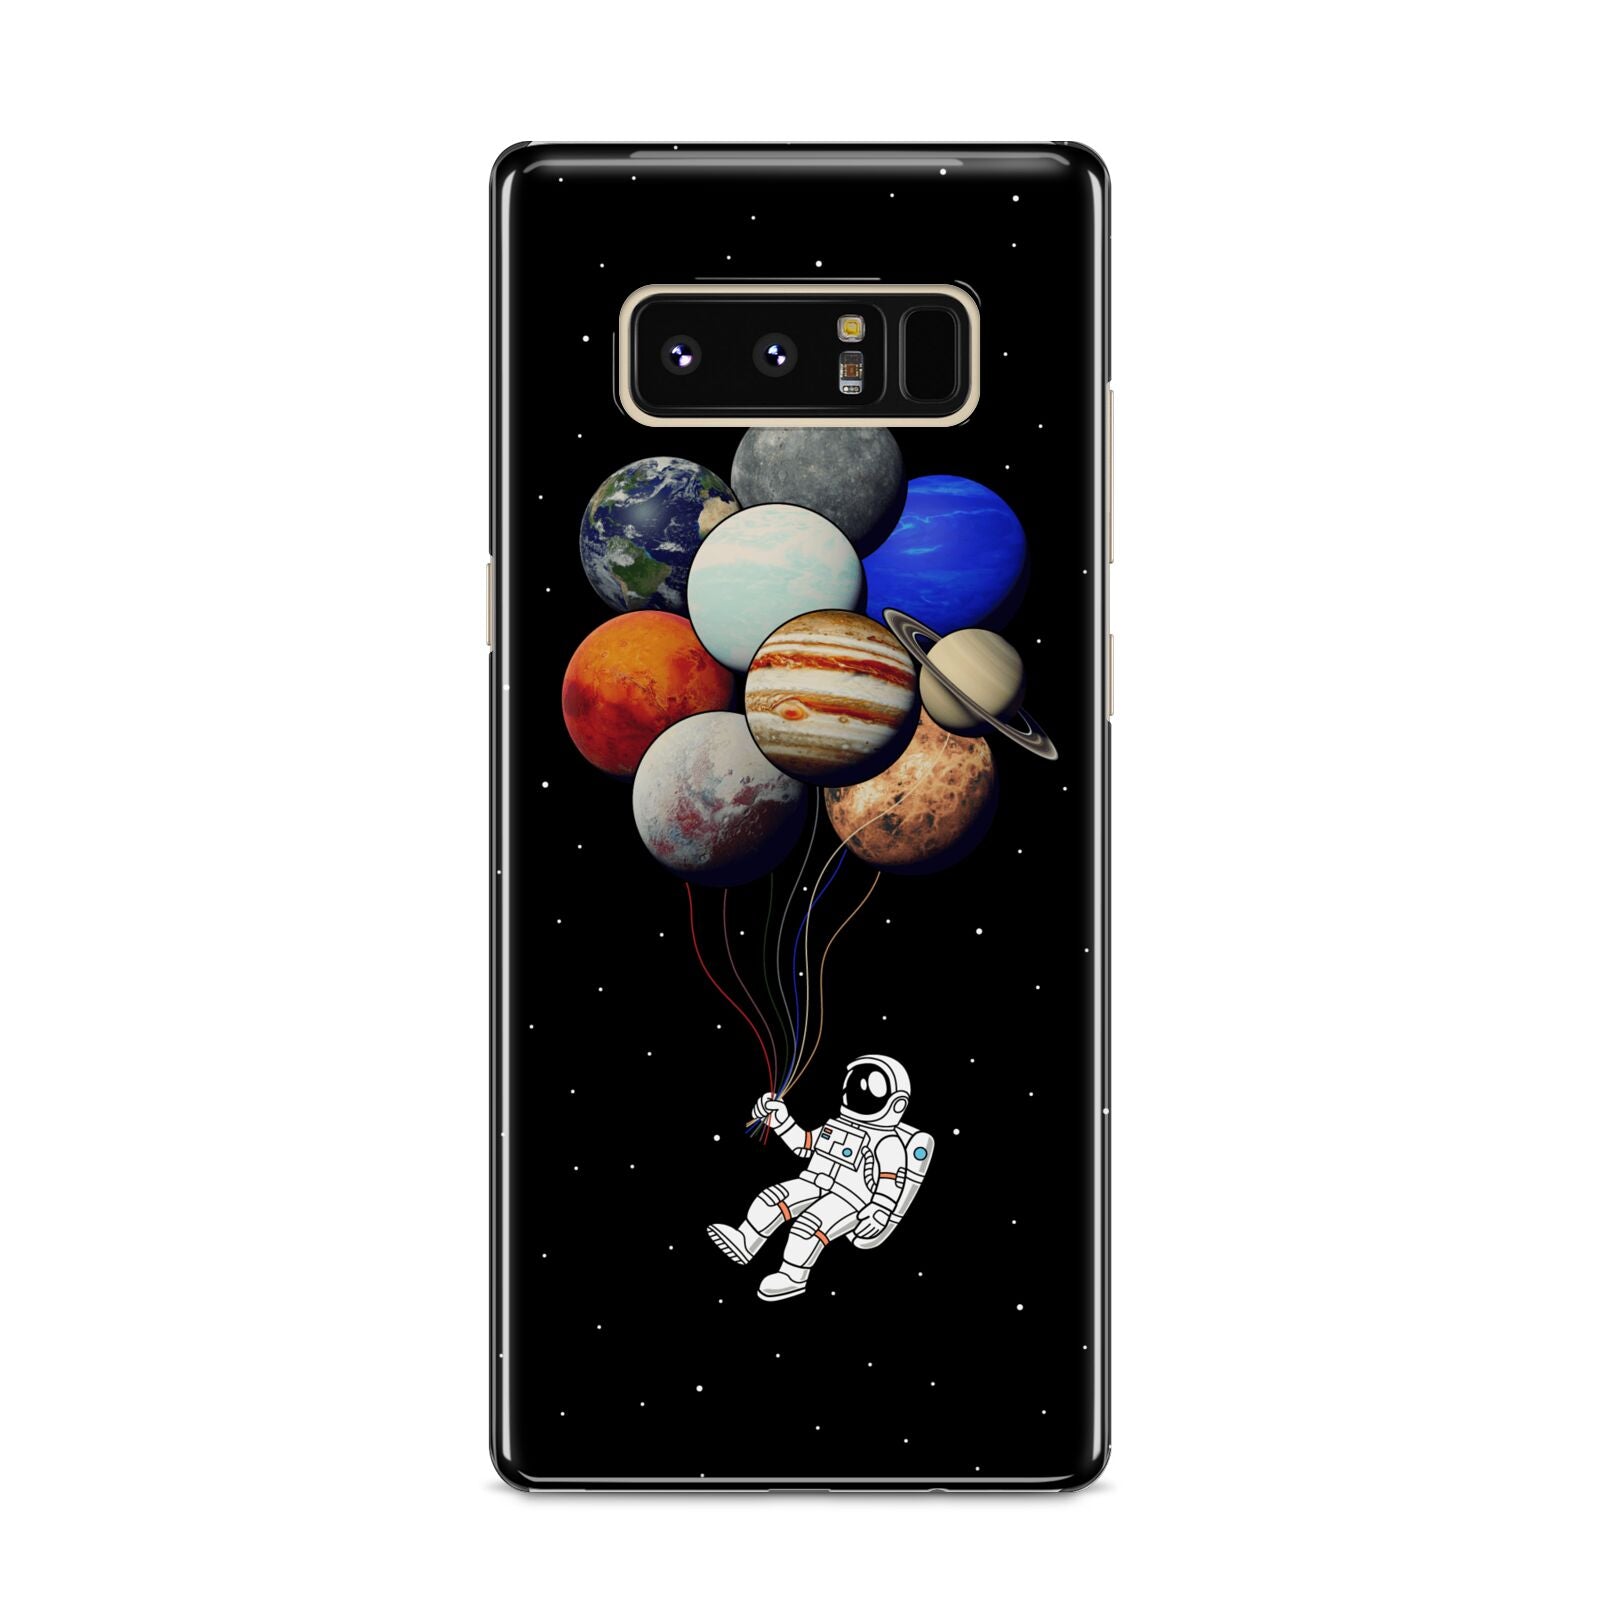 Astronaut Planet Balloons Samsung Galaxy S8 Case